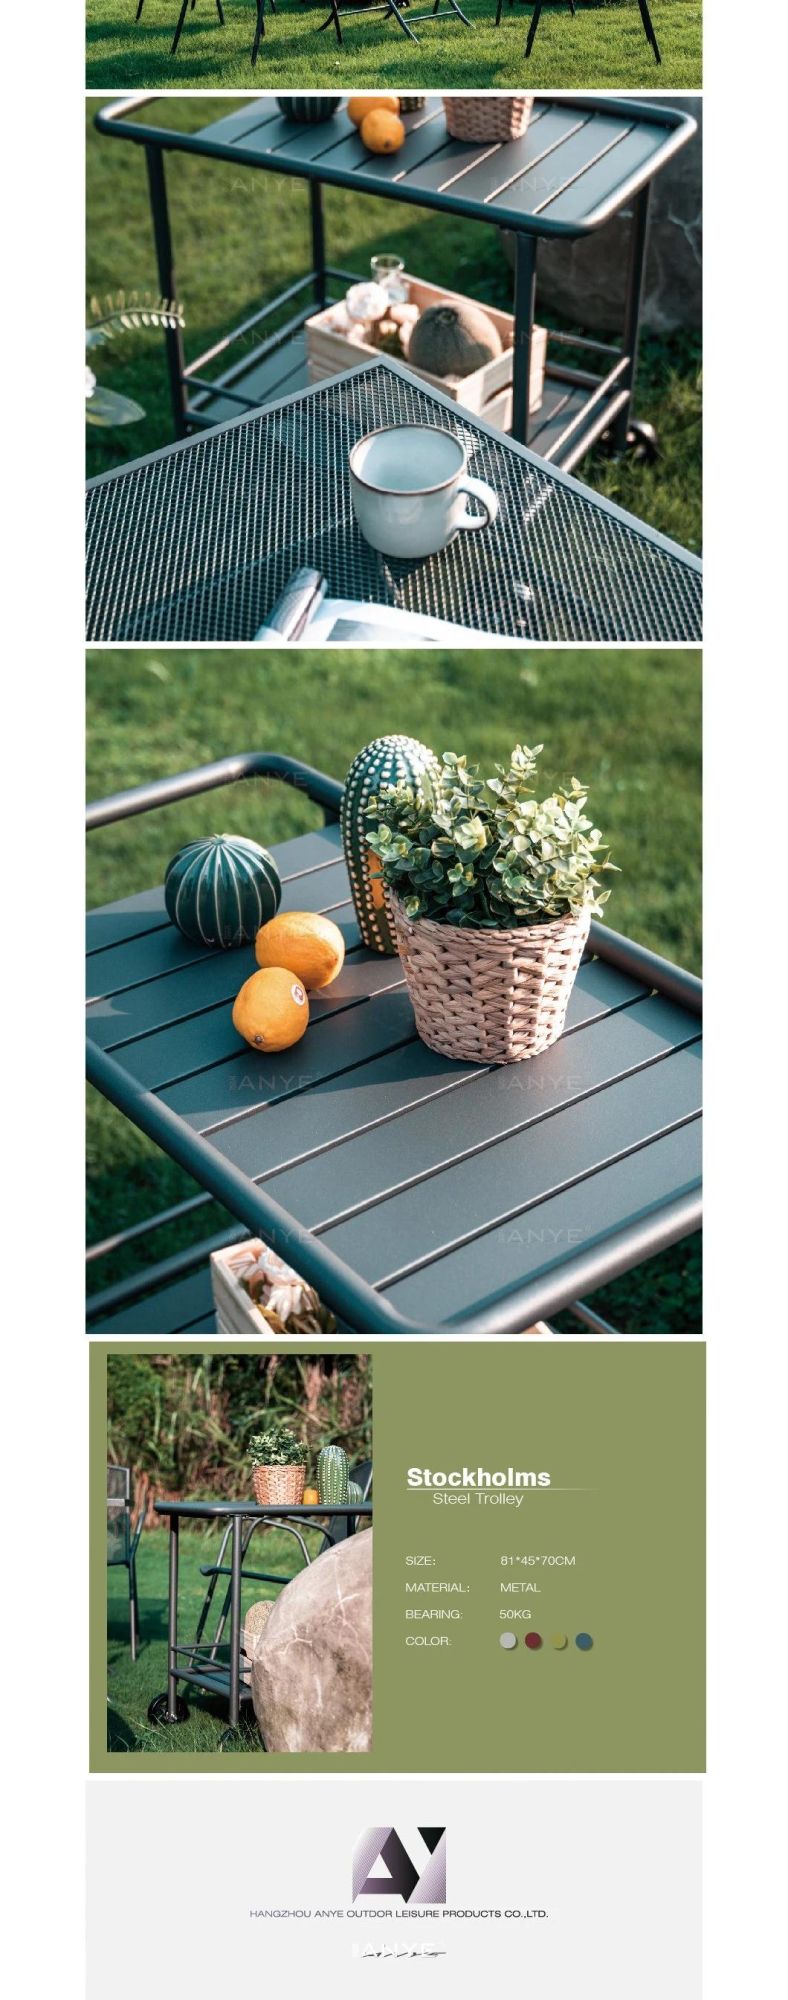 Modern Furniture Premium Steel Rust Resistant Knock Down Garden Removable Dining Cart